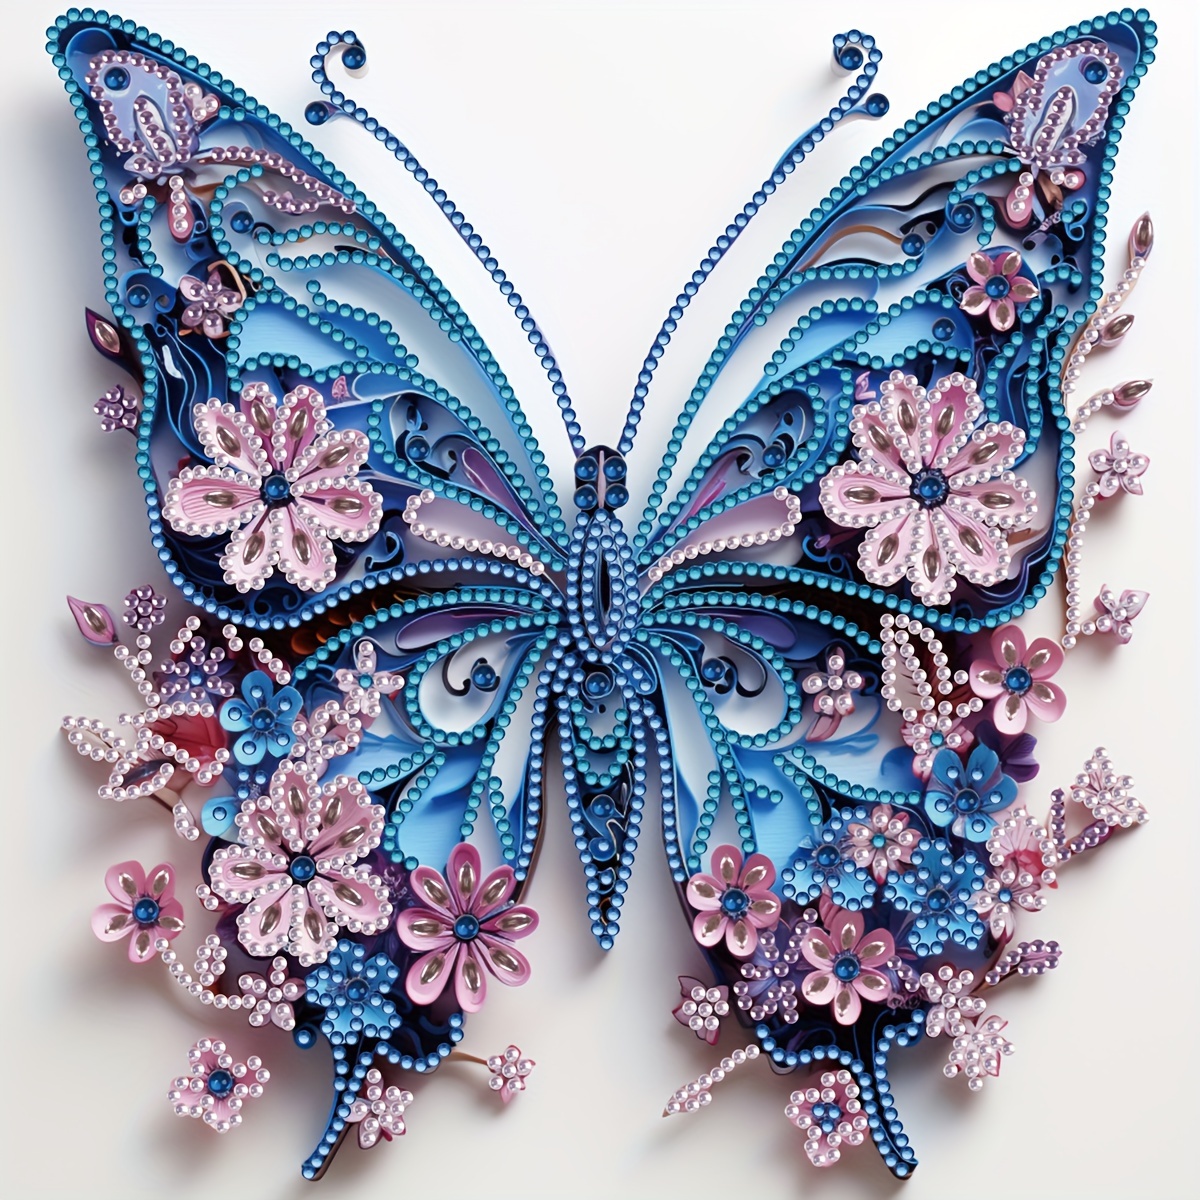 Diamond painting kit - Neon butterfly - Coricamo